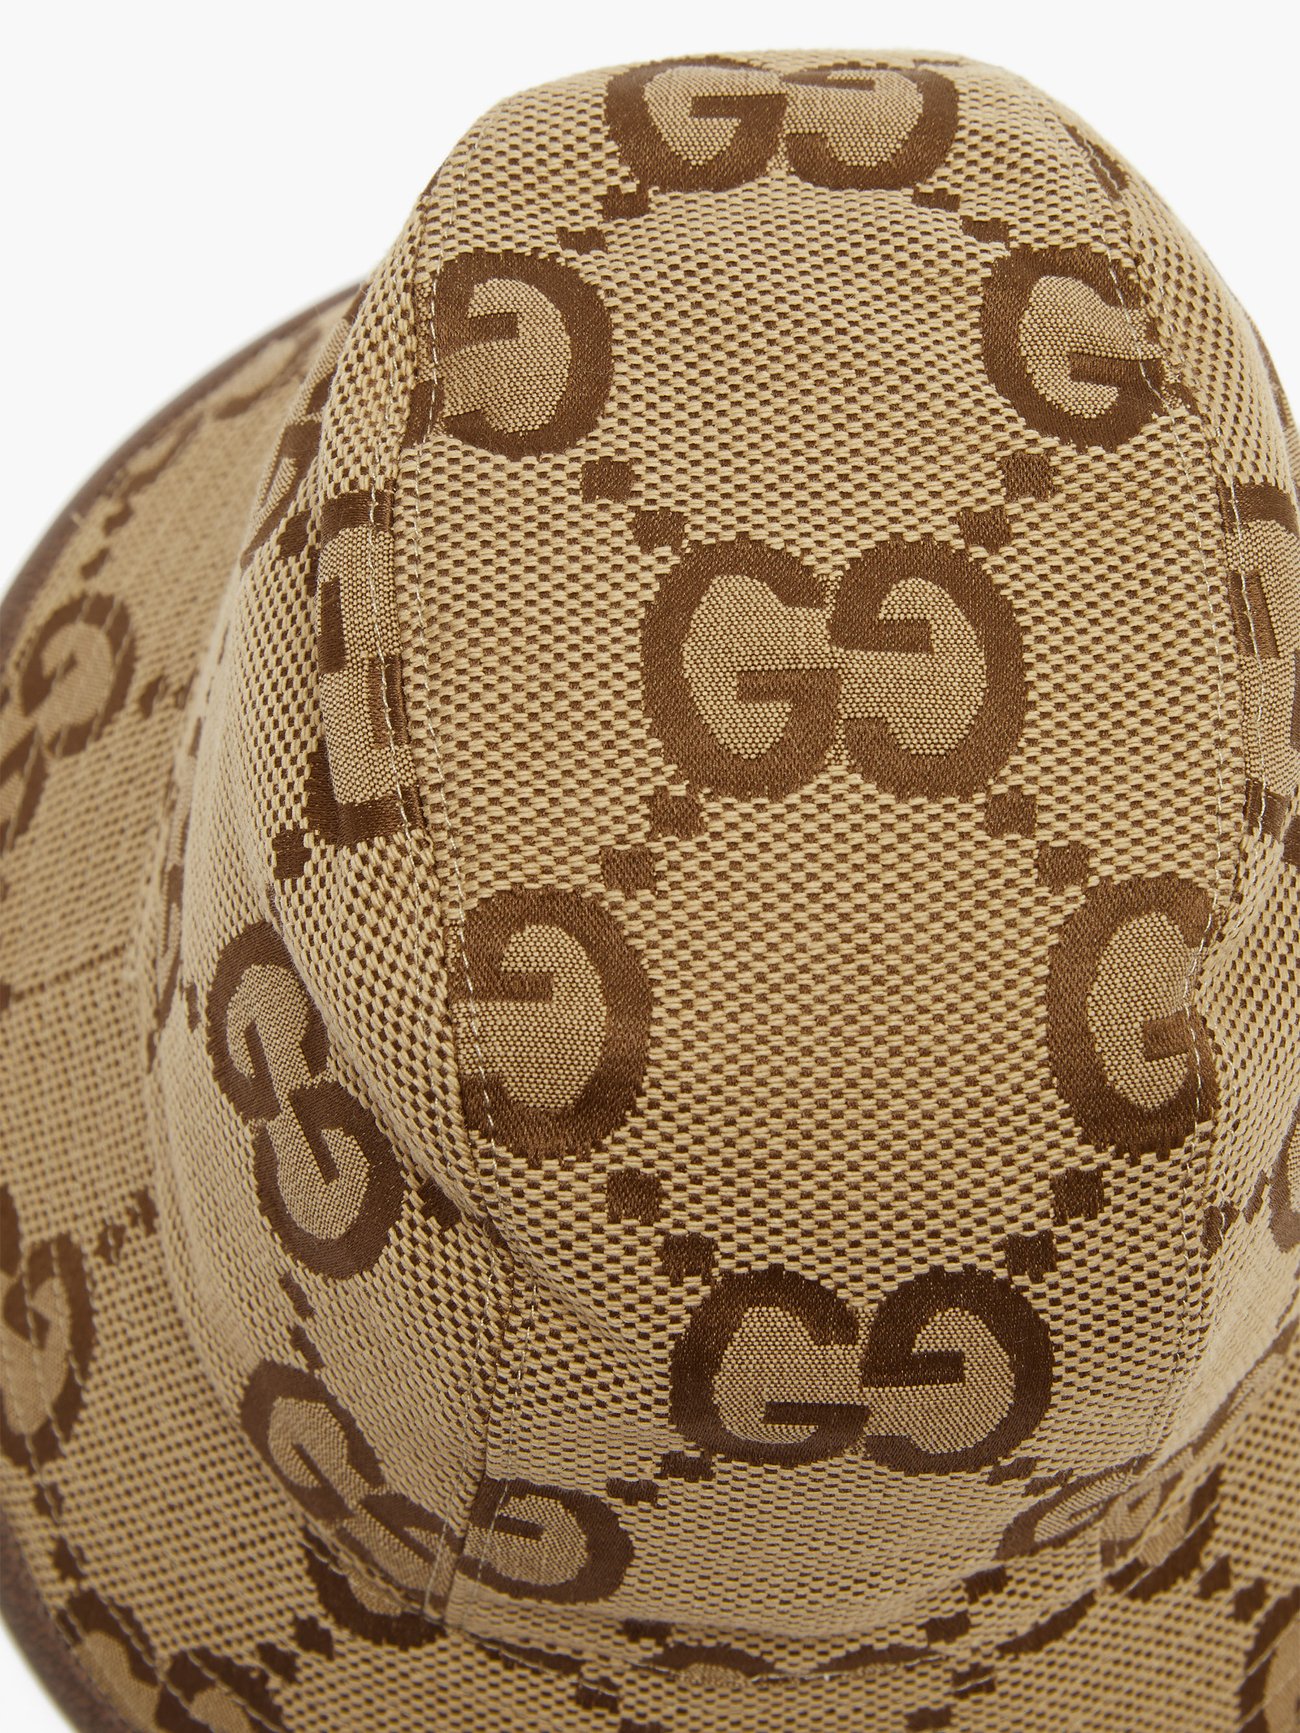 Gucci Maxi Gg-supreme Canvas Bucket Hat - Brown, Beige